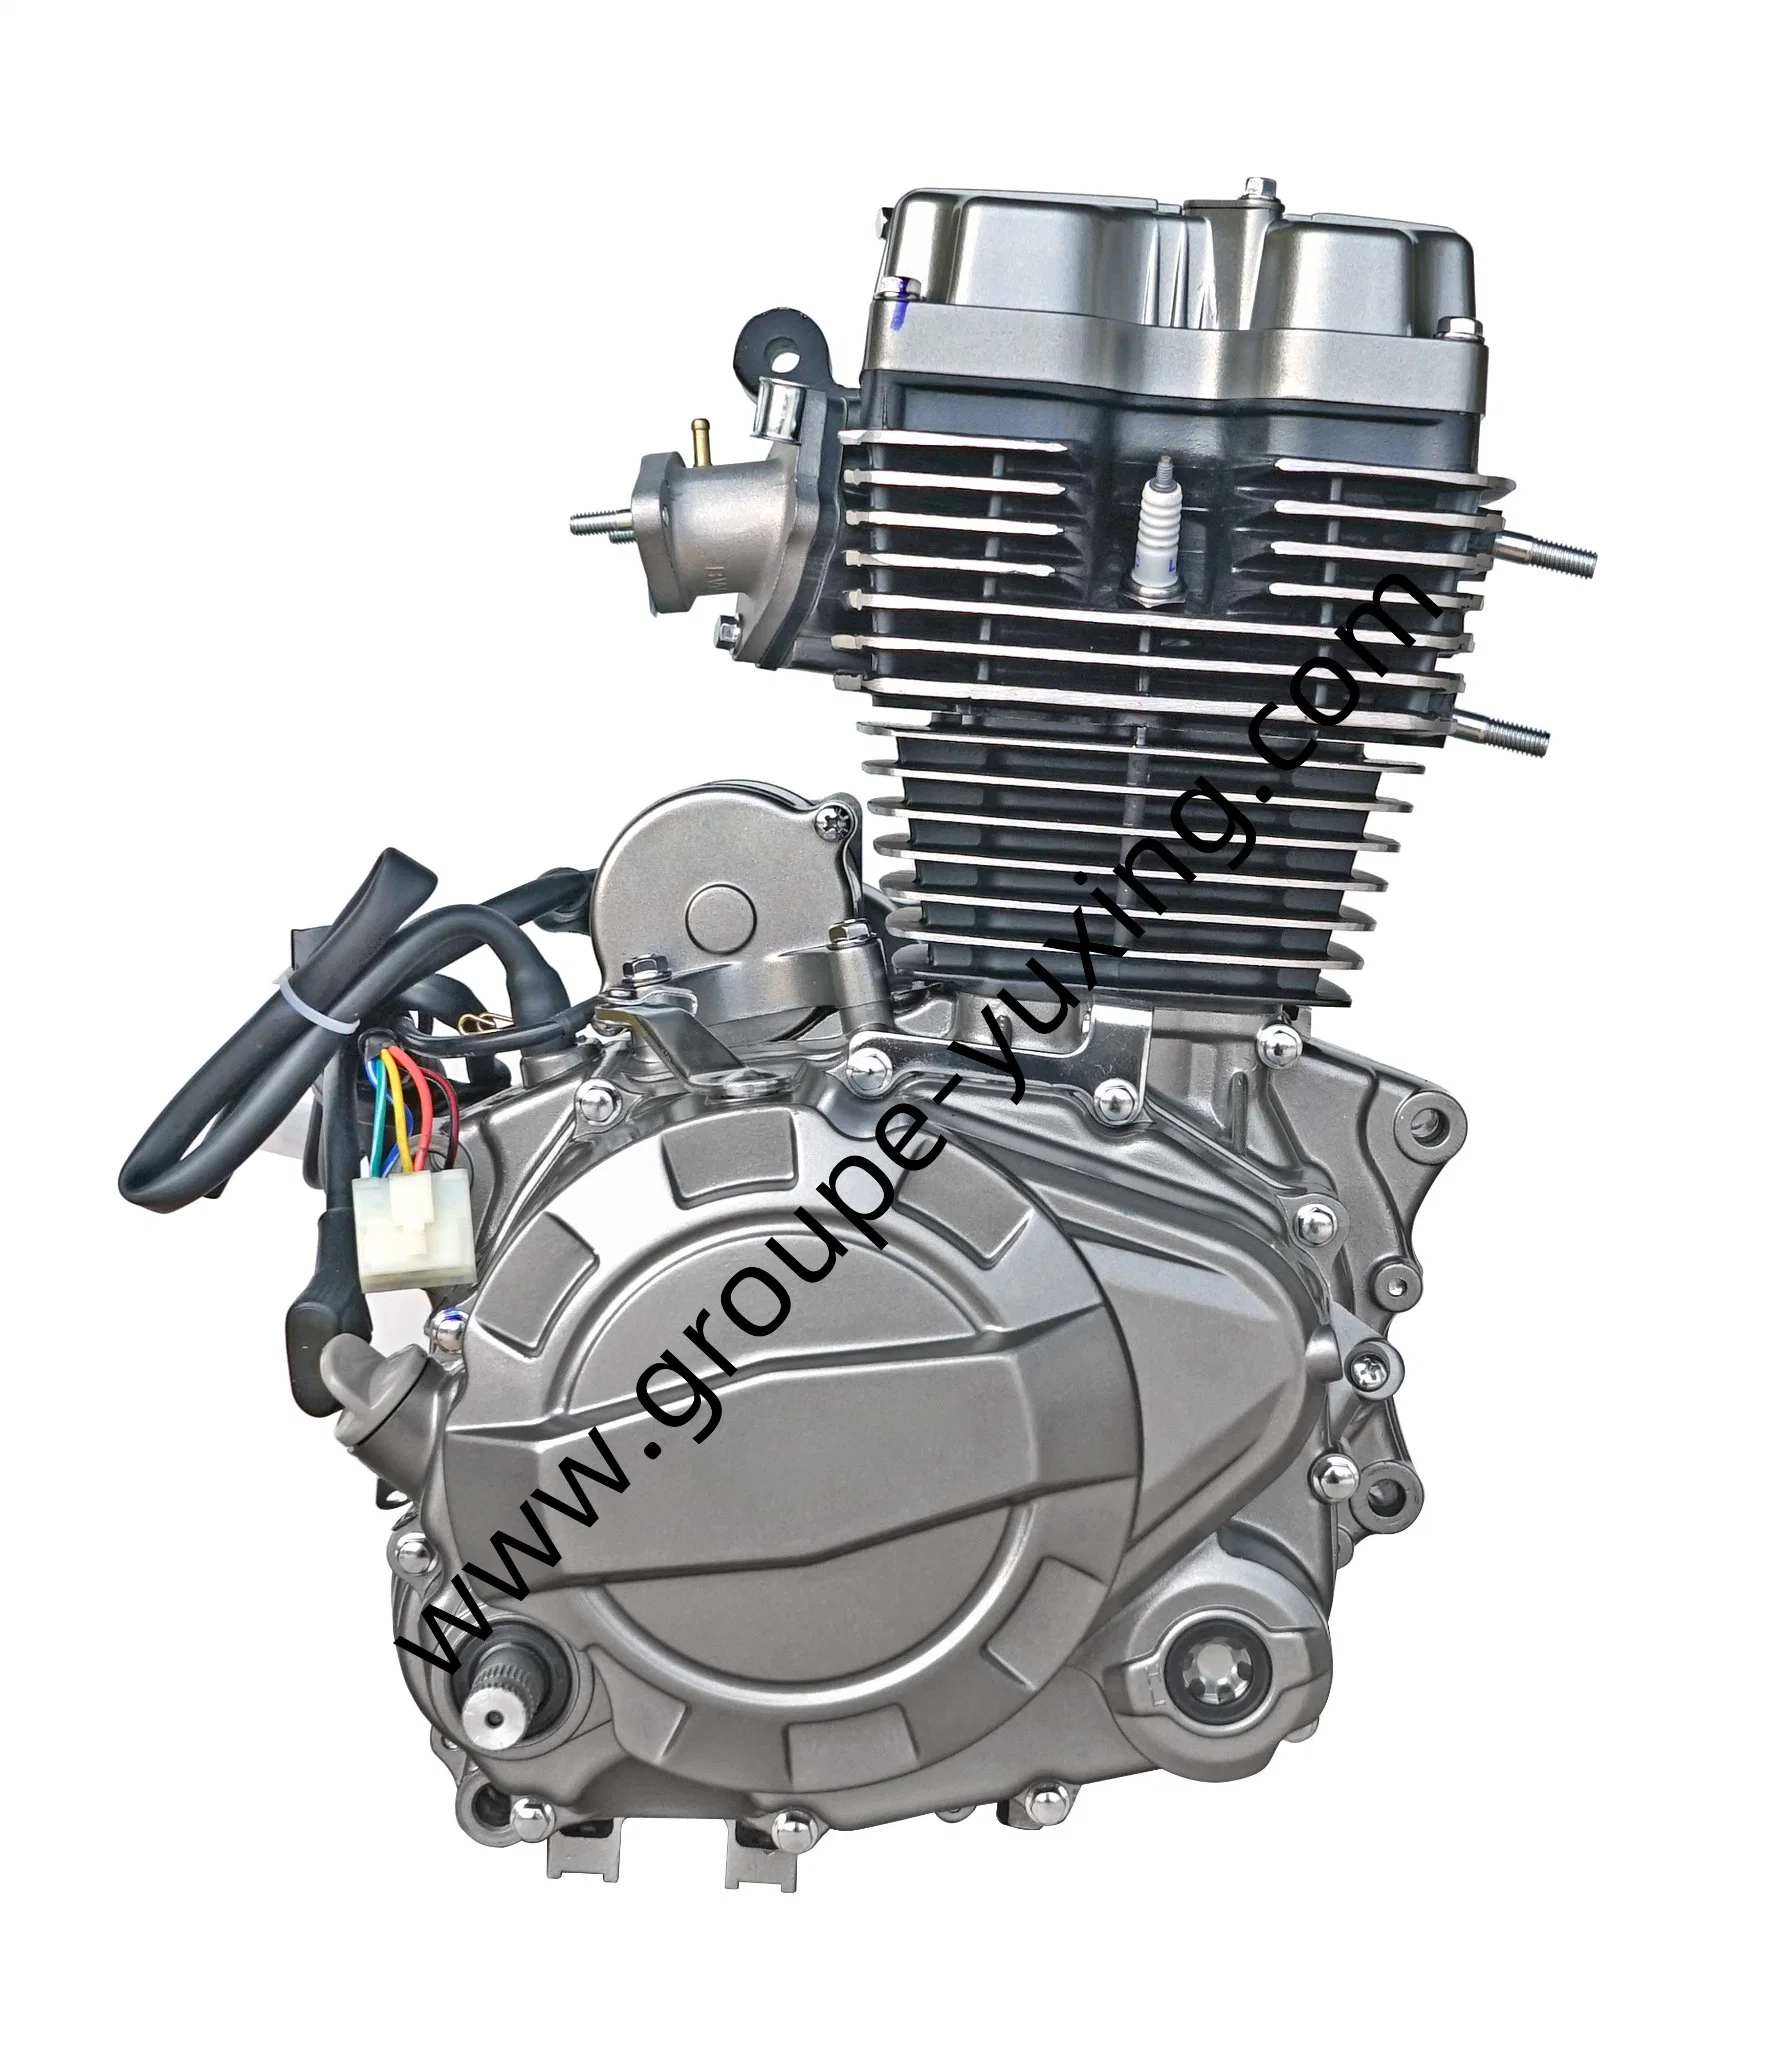 50cc/100cc/125cc/150cc/200cc Motorcycle Engine for Honda/Suzuki/YAMAHA/Bajaj Tvs/Scooter/Dirt Bike/Tricycle Motorcycle Engine